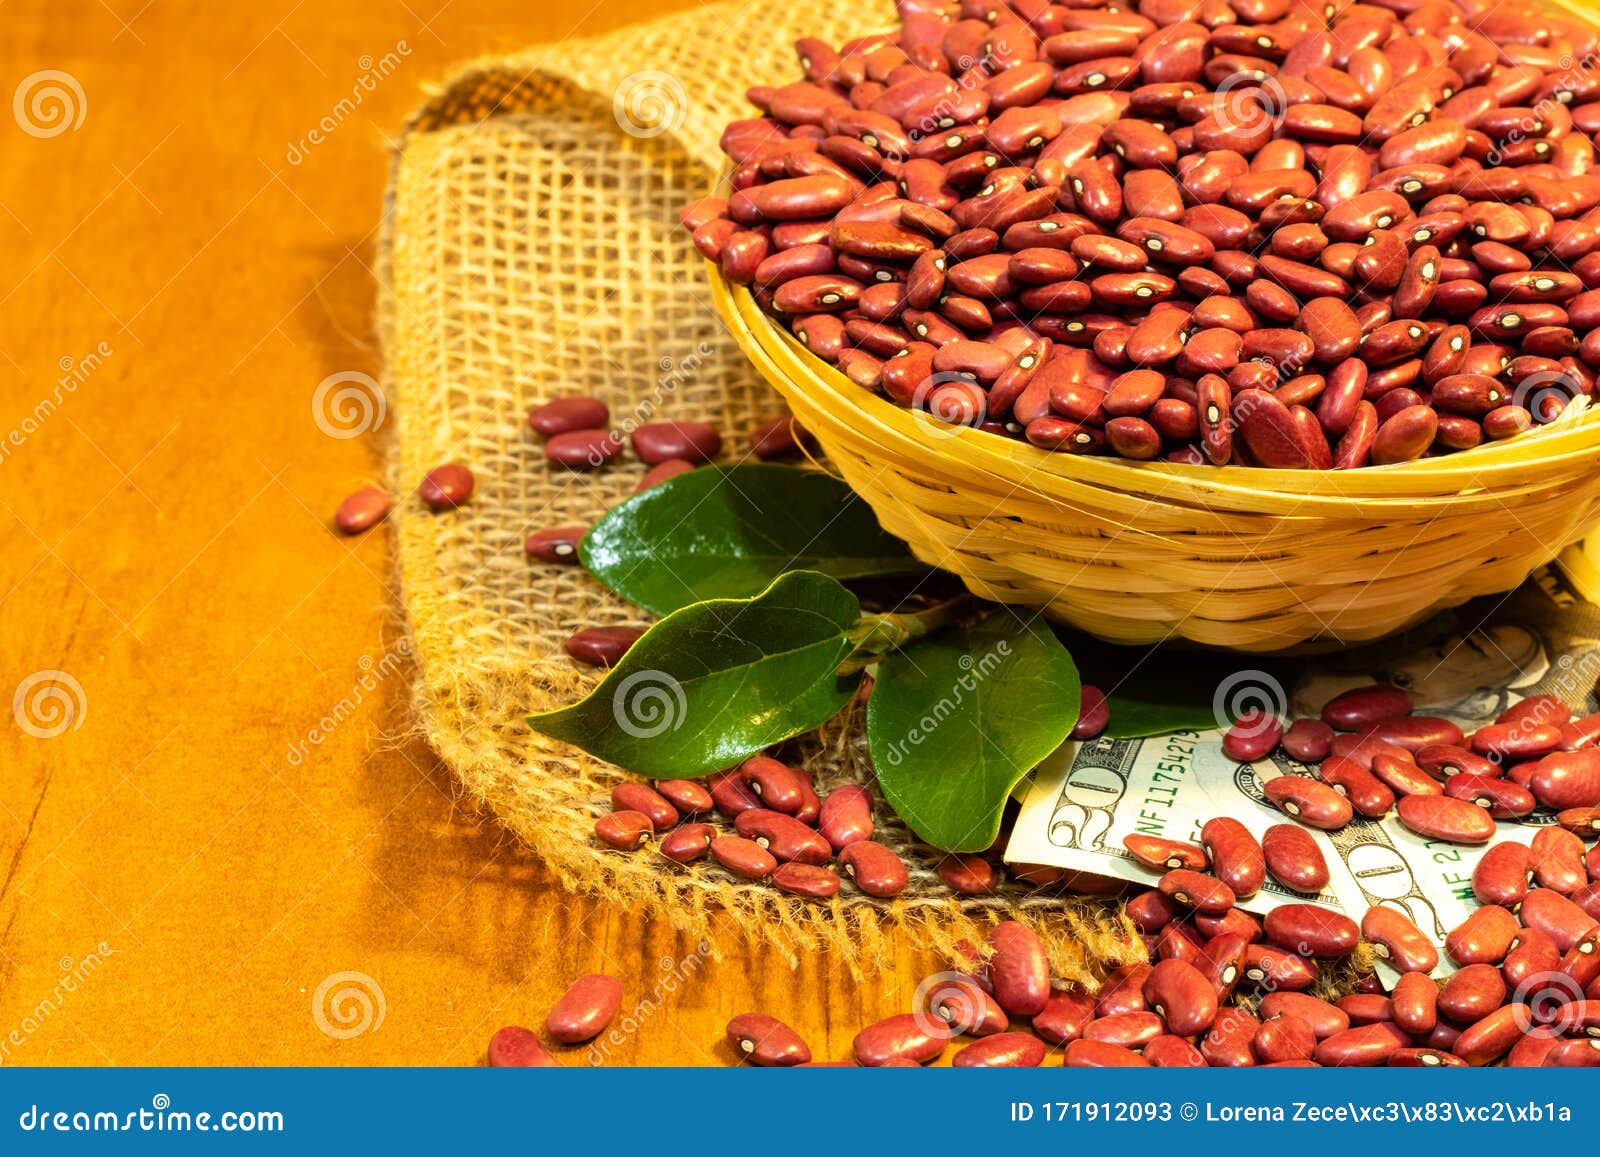 red kidney beans in a small woven basket on an artesan weave fabric, twenty usd bills